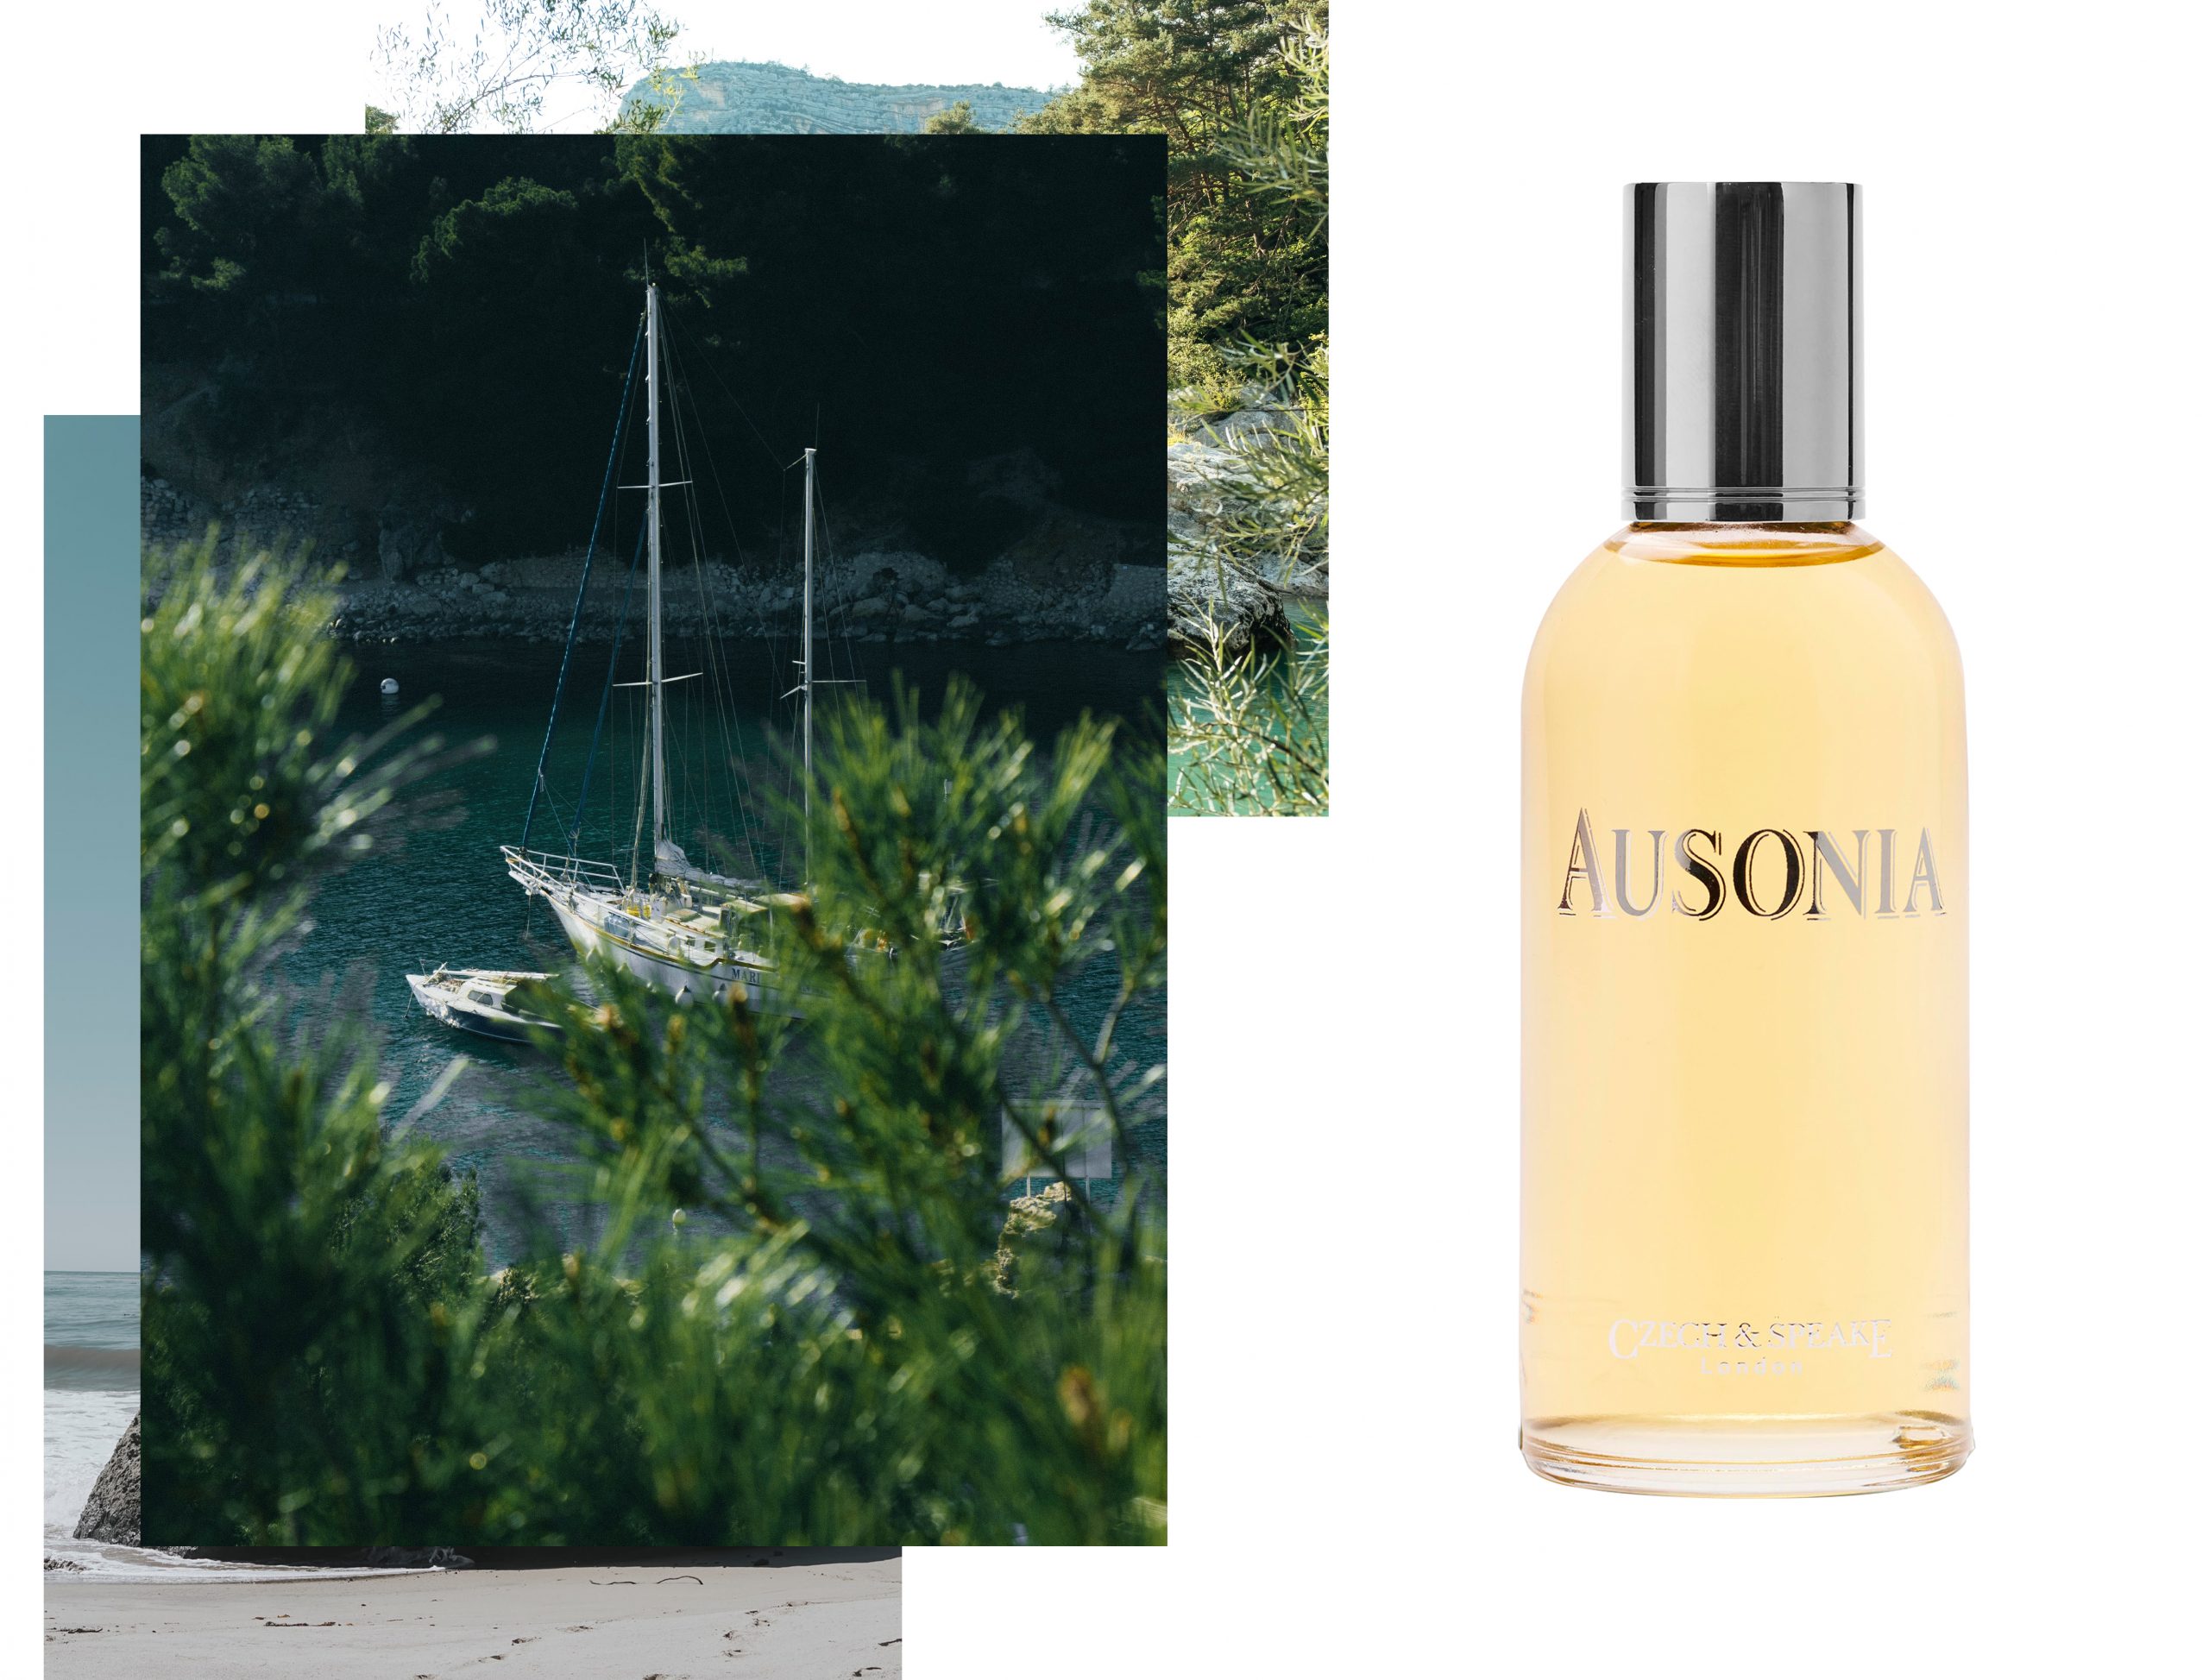 Ausonia fragrance 100ml south west france boats on sea pine trees